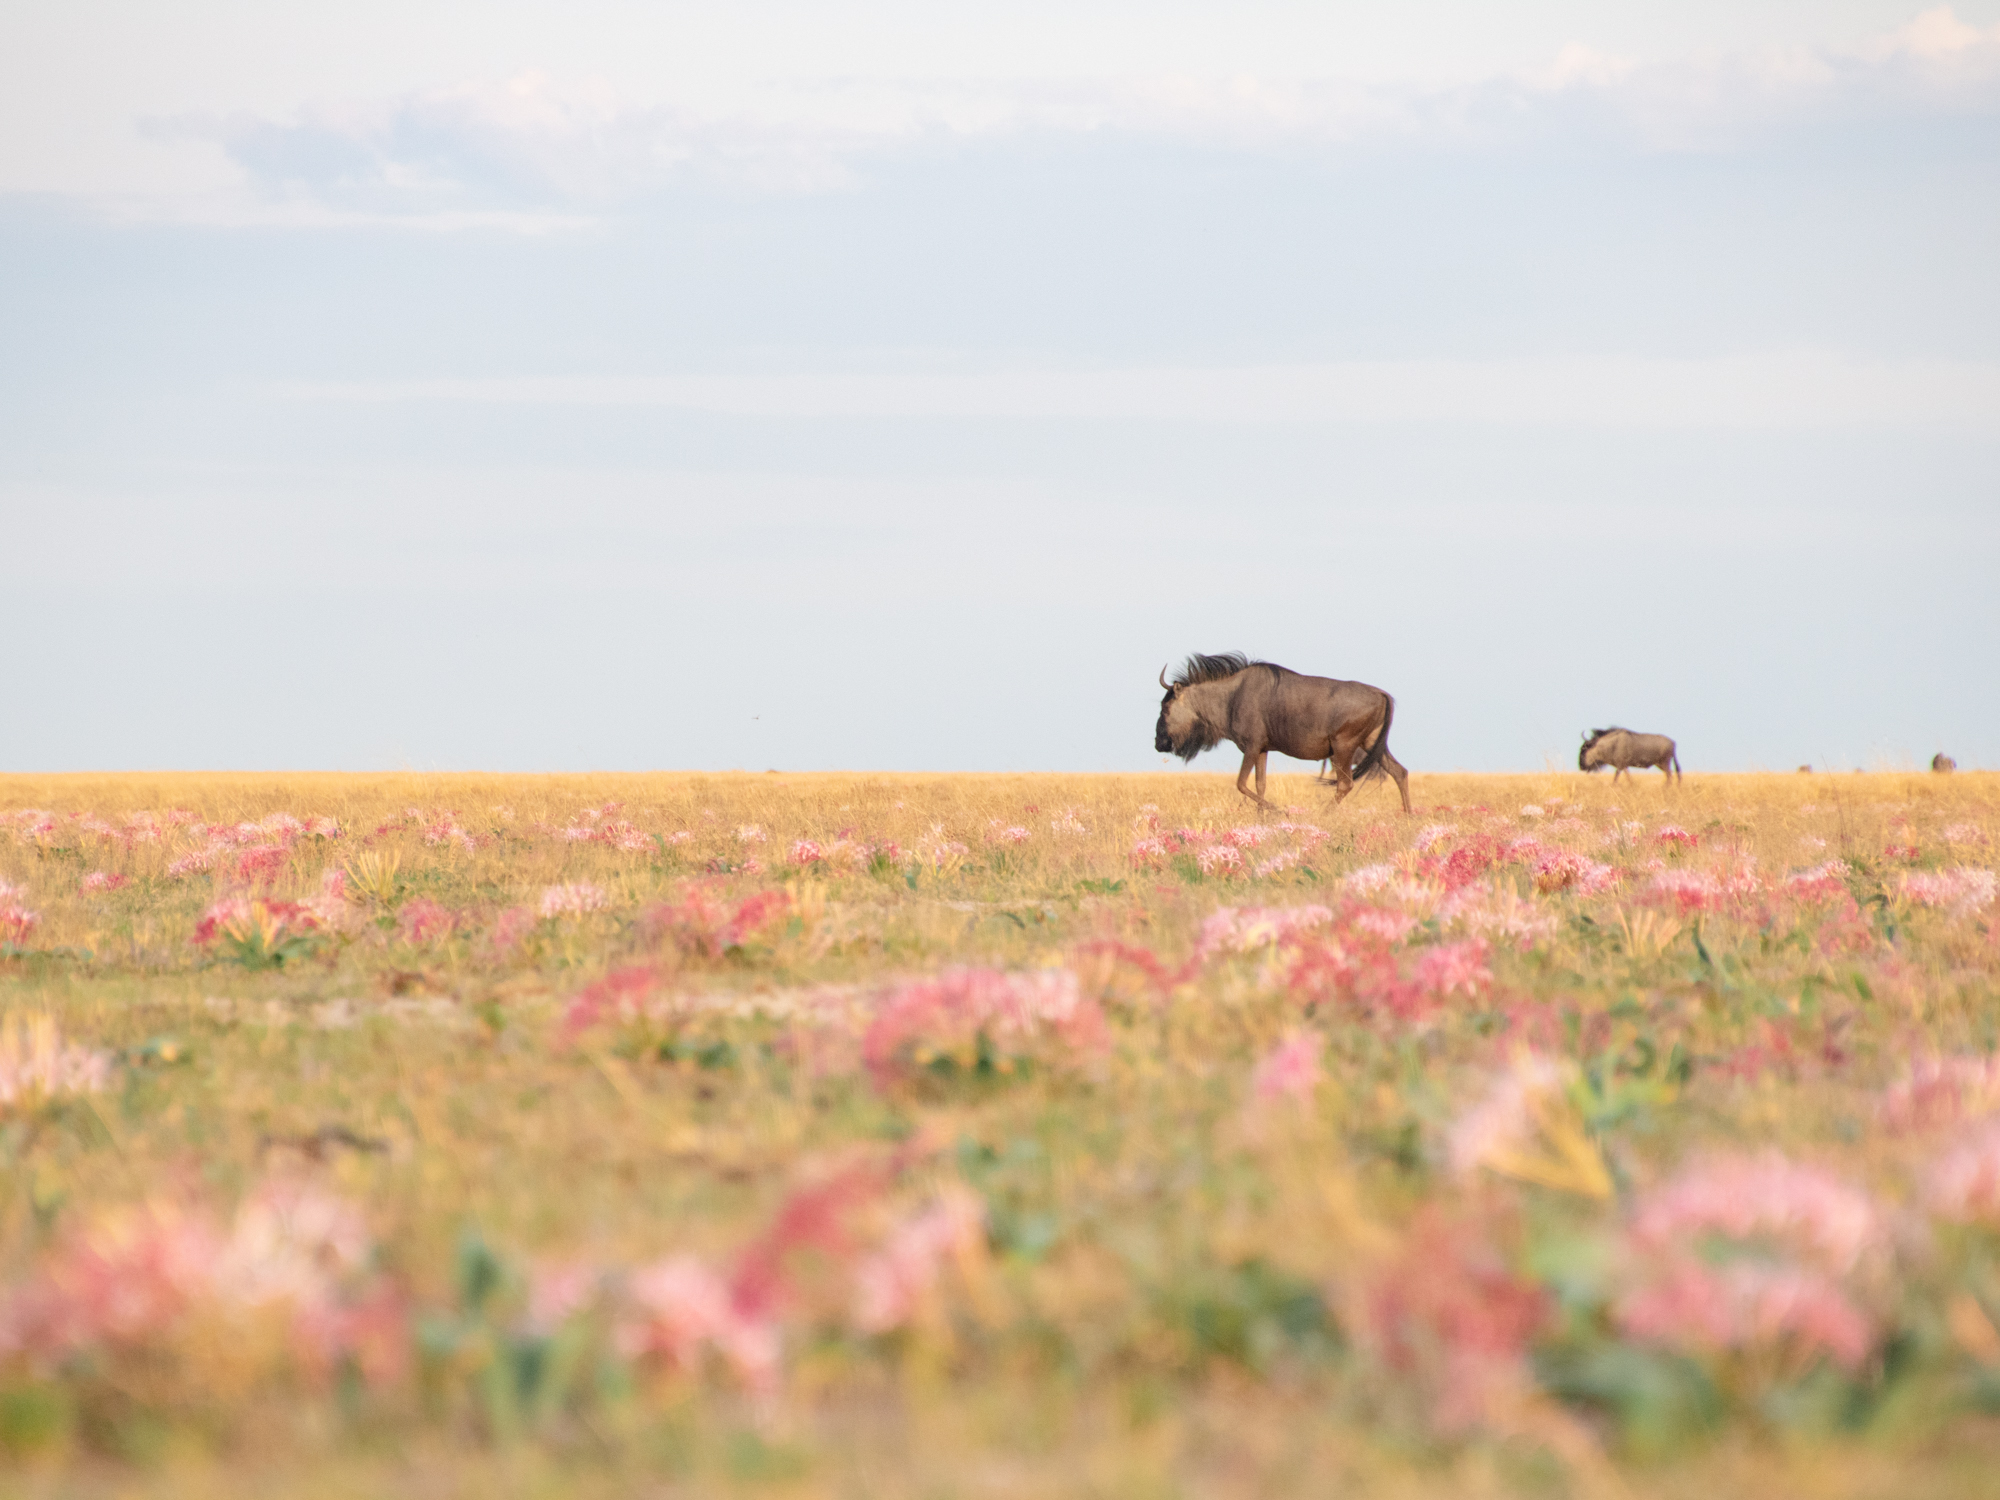 A wildebeest on a flowering savannah.